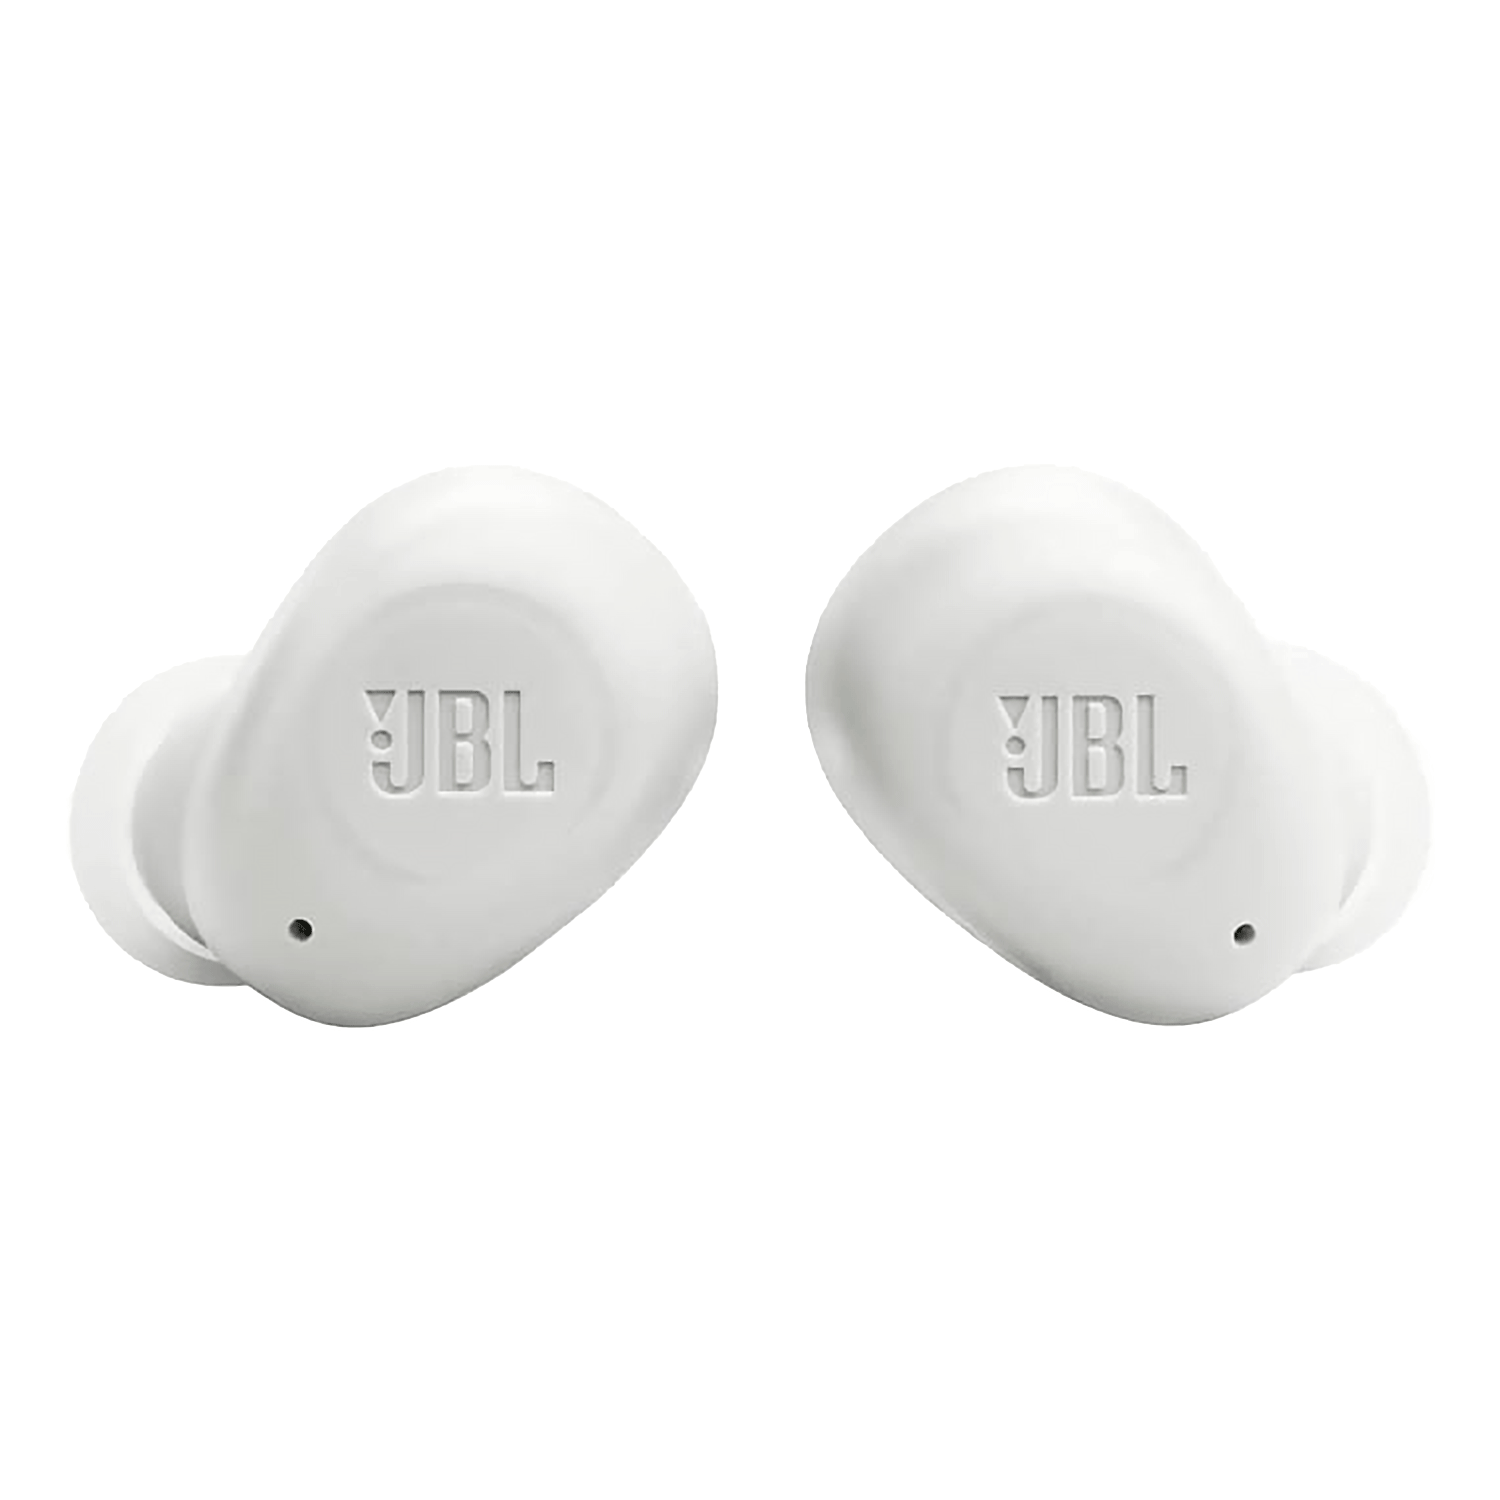 Fone de Ouvido JBL Vibe Buds / Bluetooth - Branco